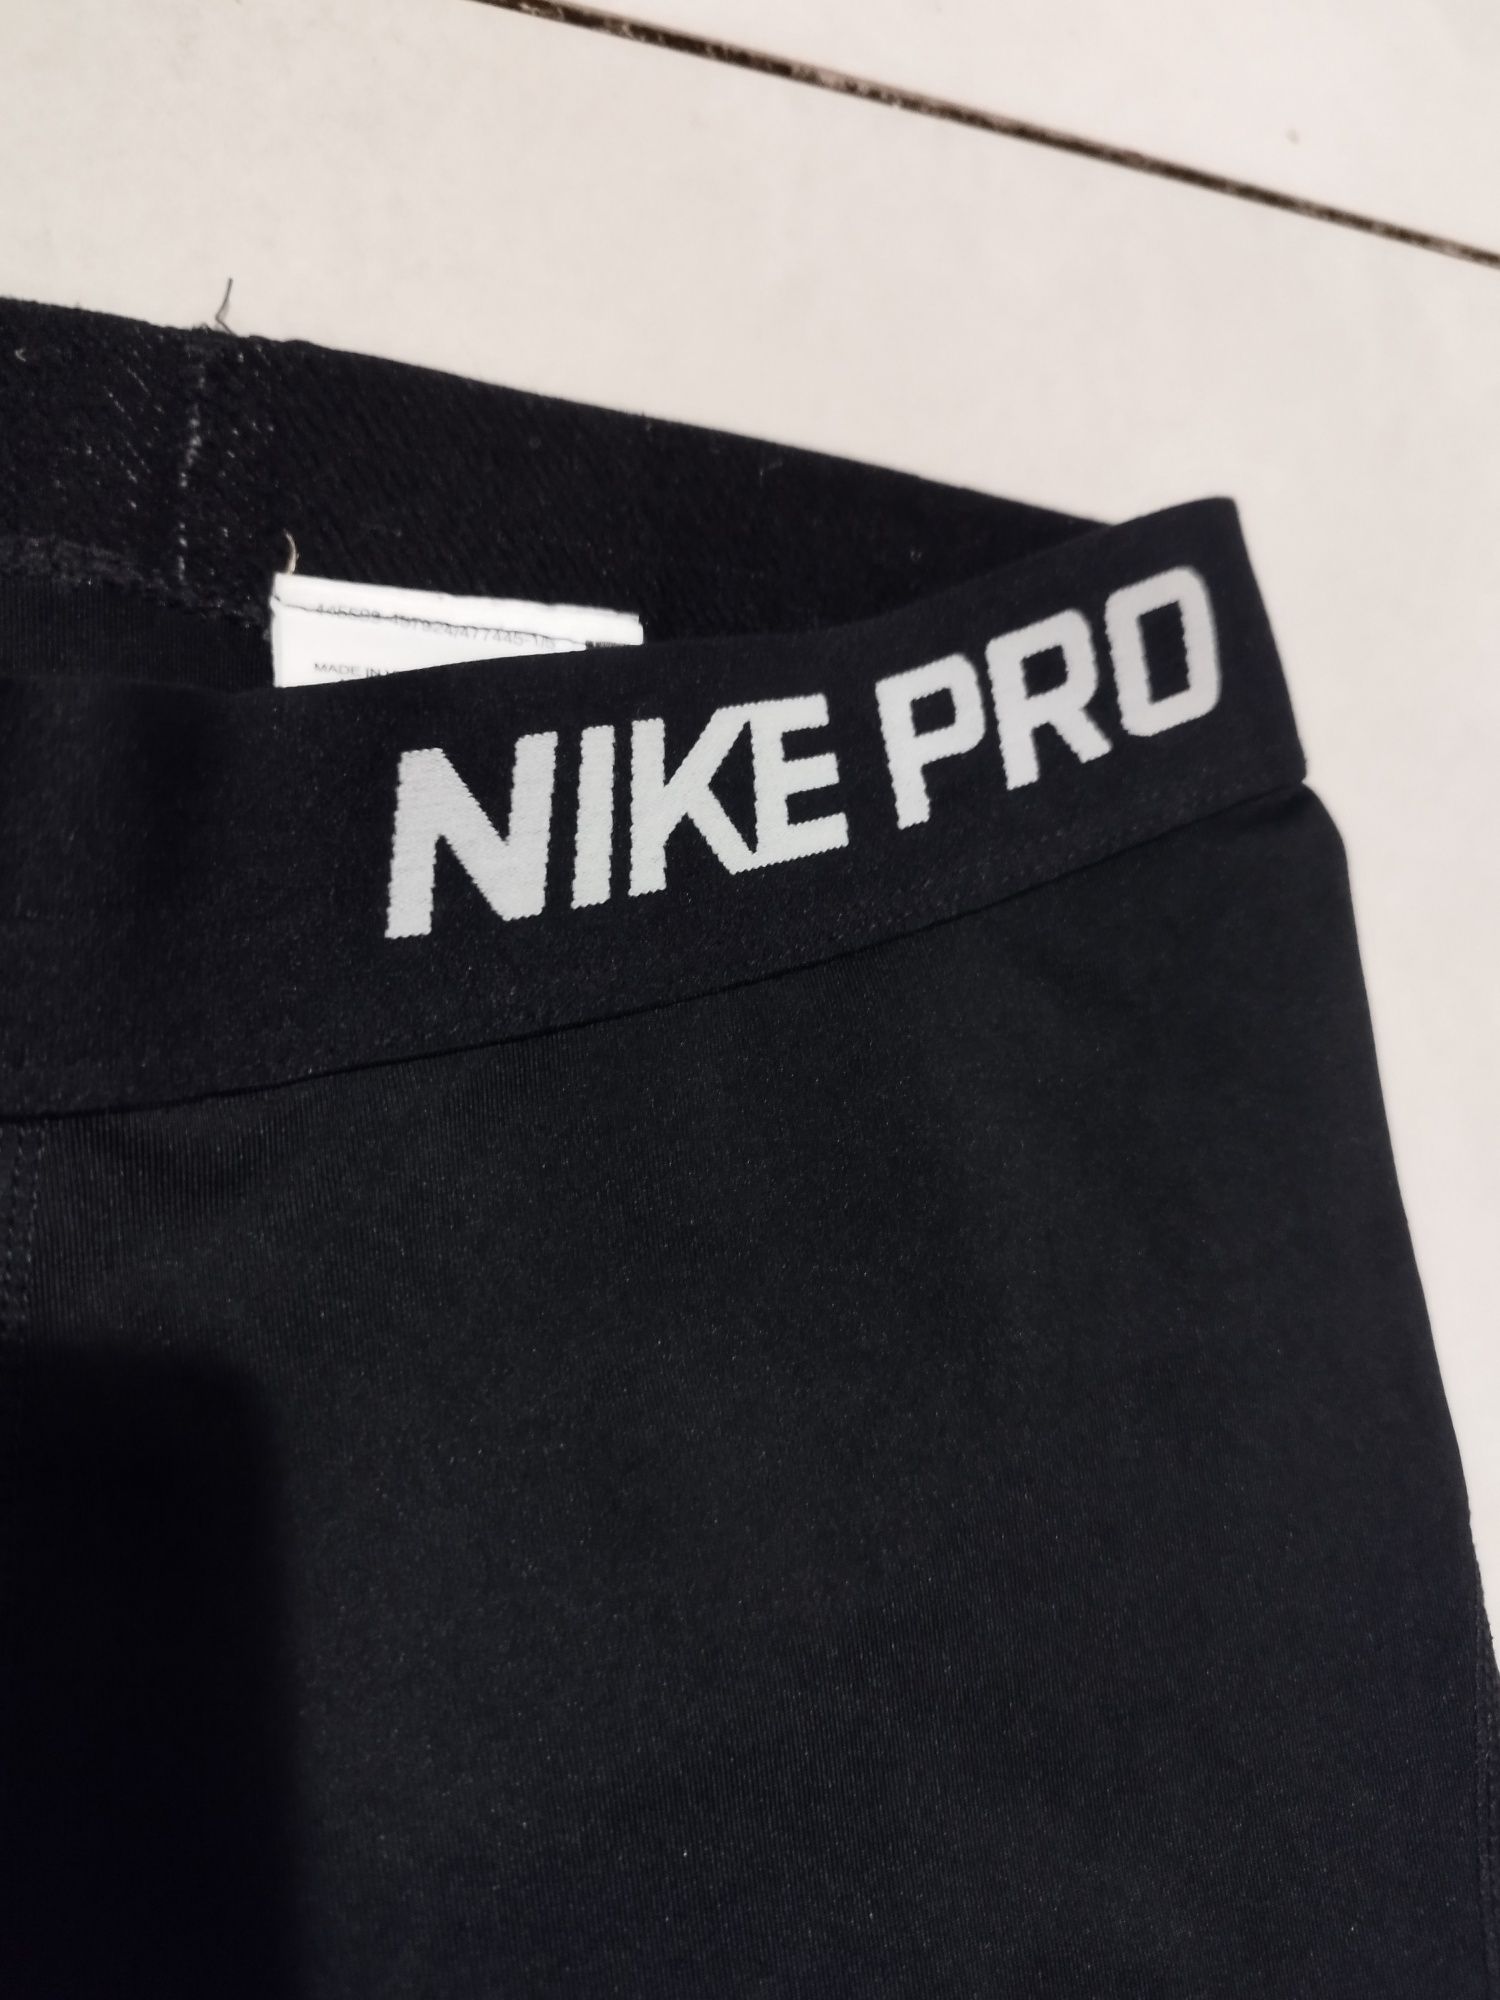 Leginsy rybaczki Nike Pro rozmiar S